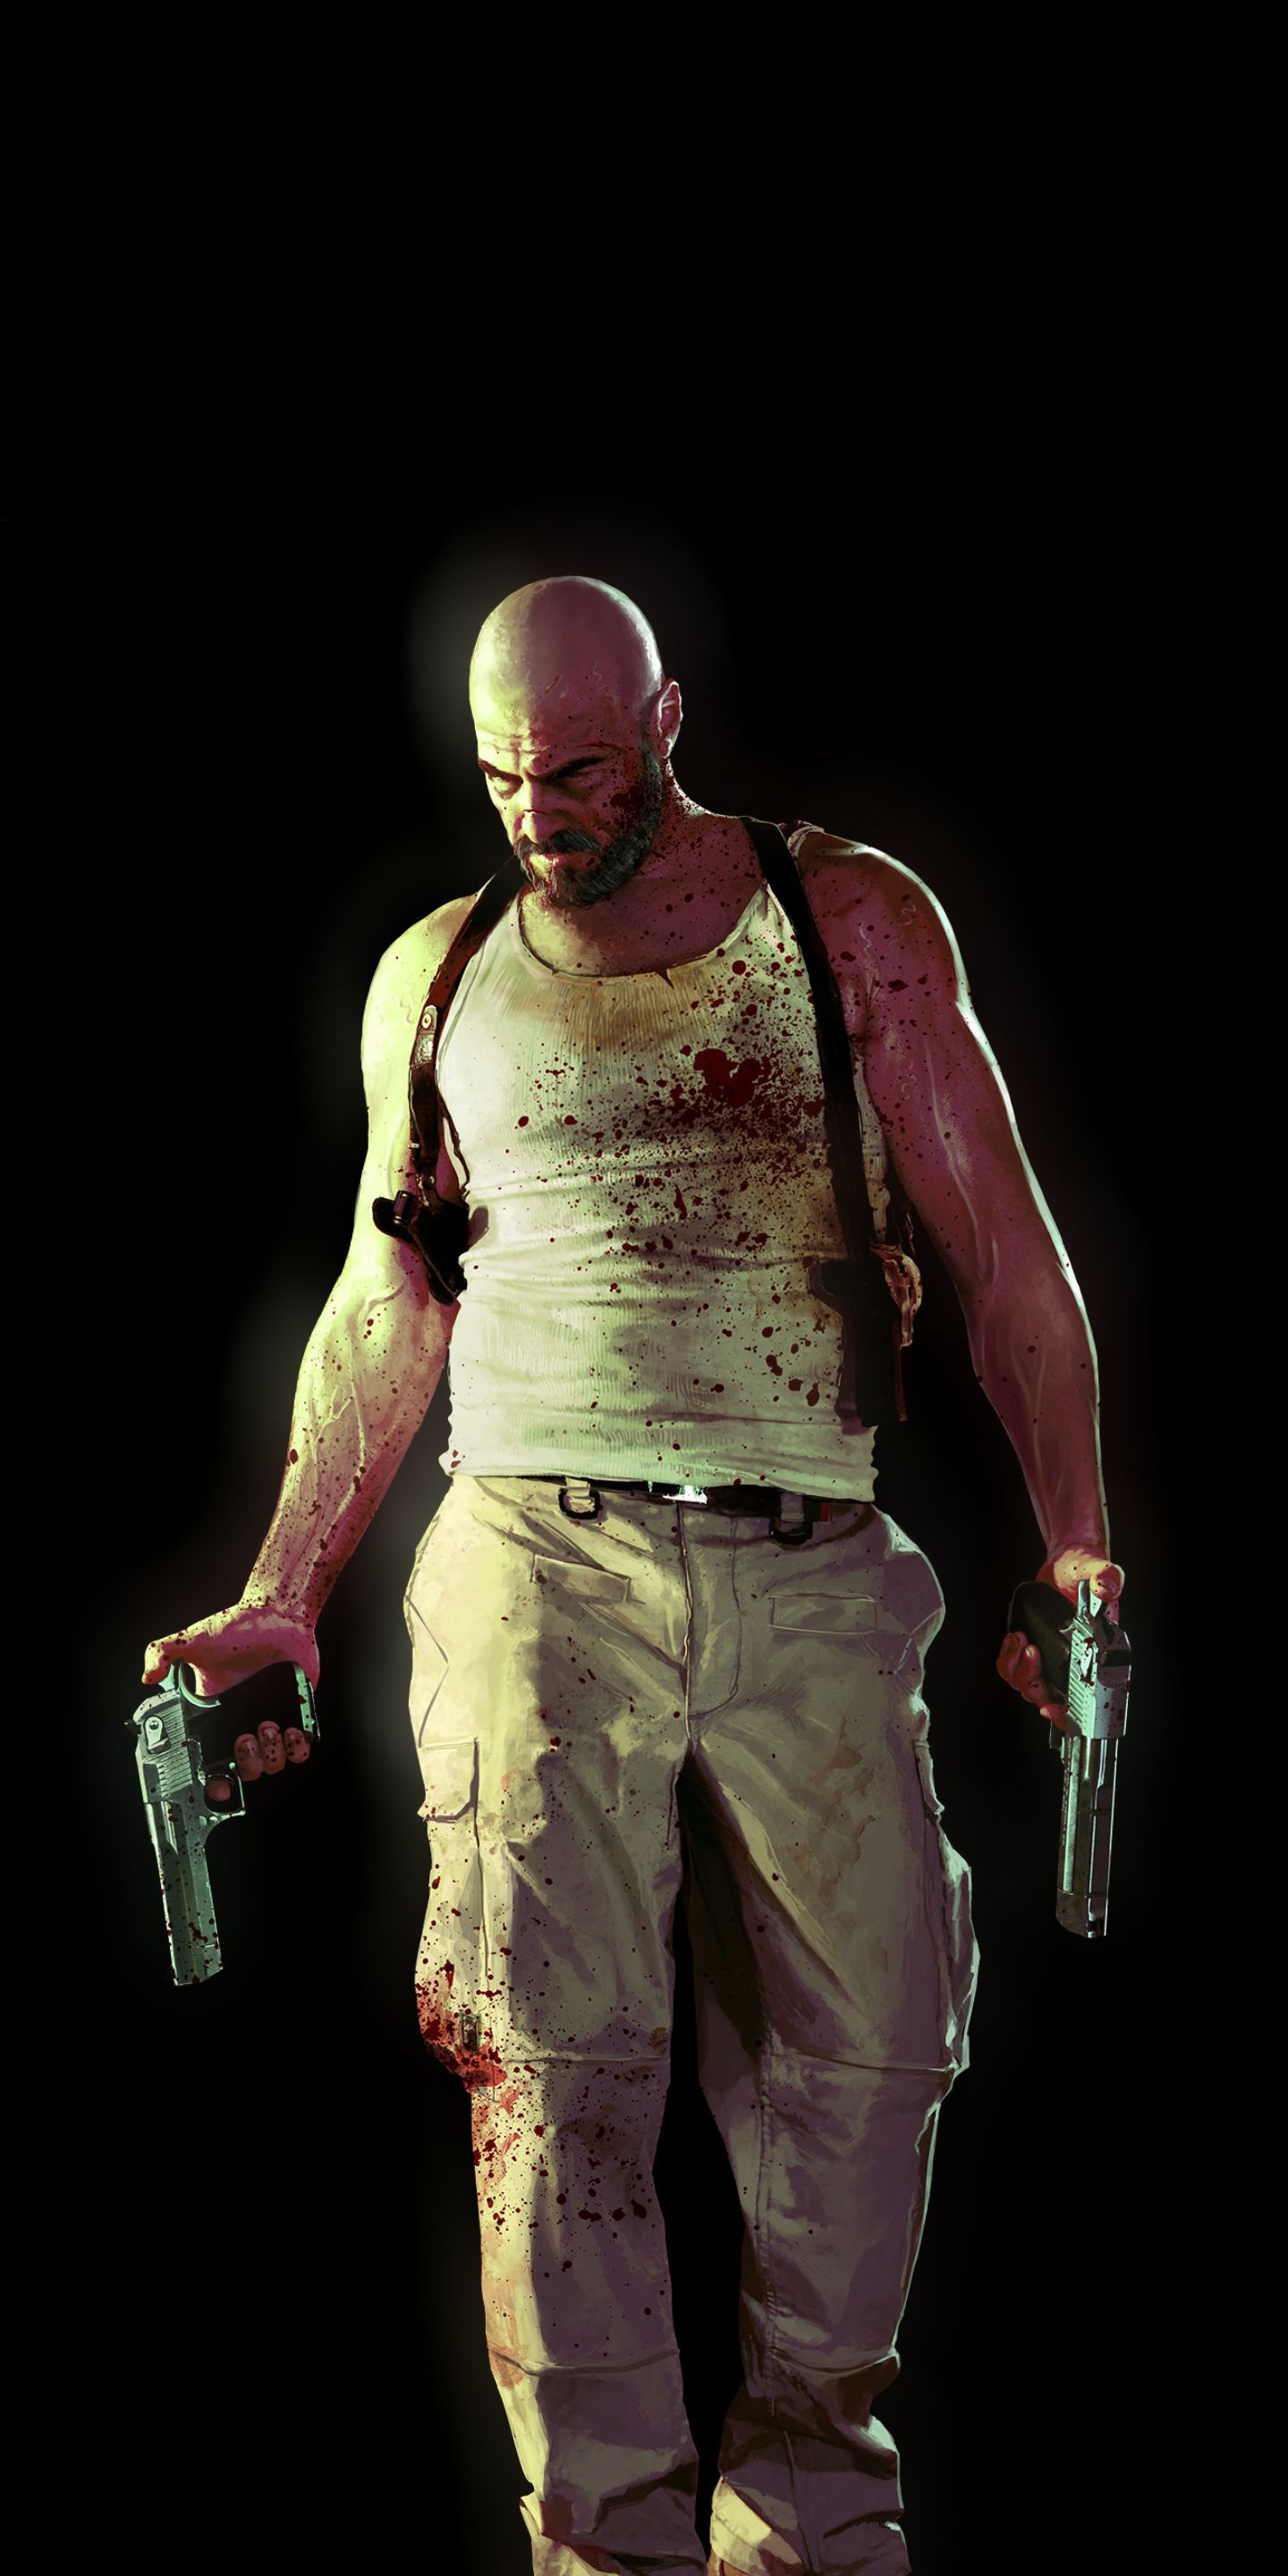 Max Payne Phone Wallpaper Update! : r/maxpayne